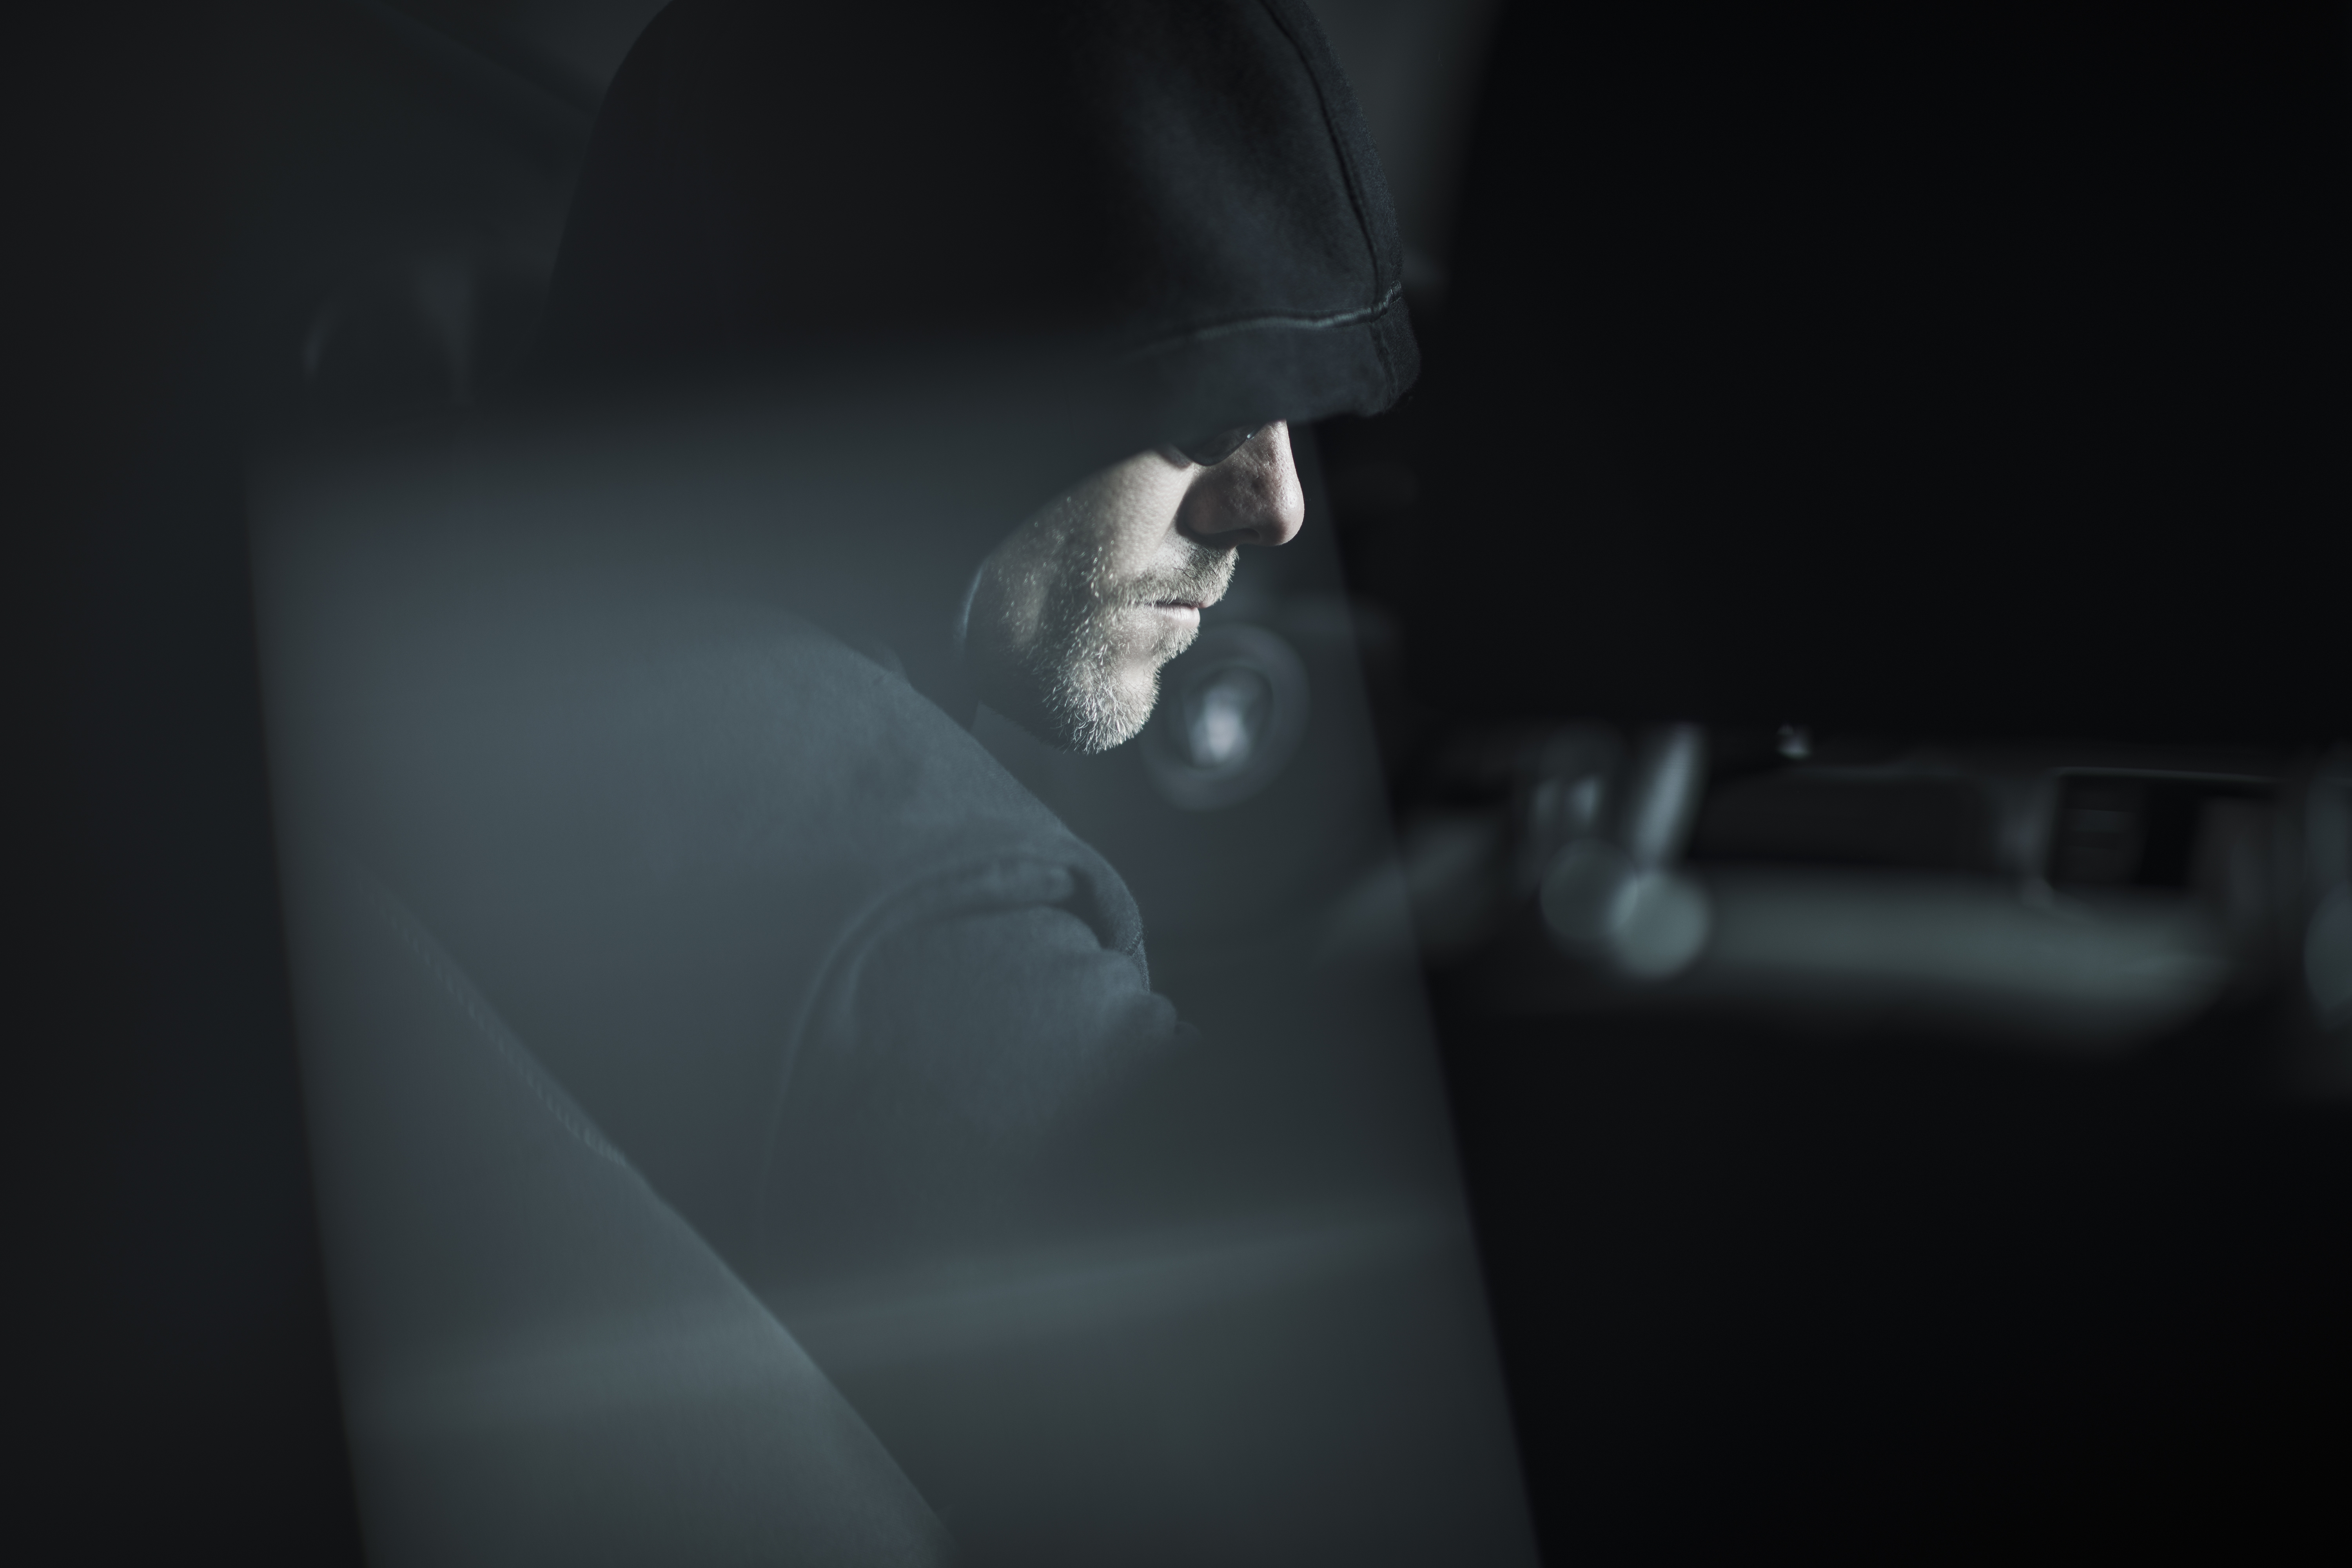 Robber in Black Hood. | Source: Shutterstock